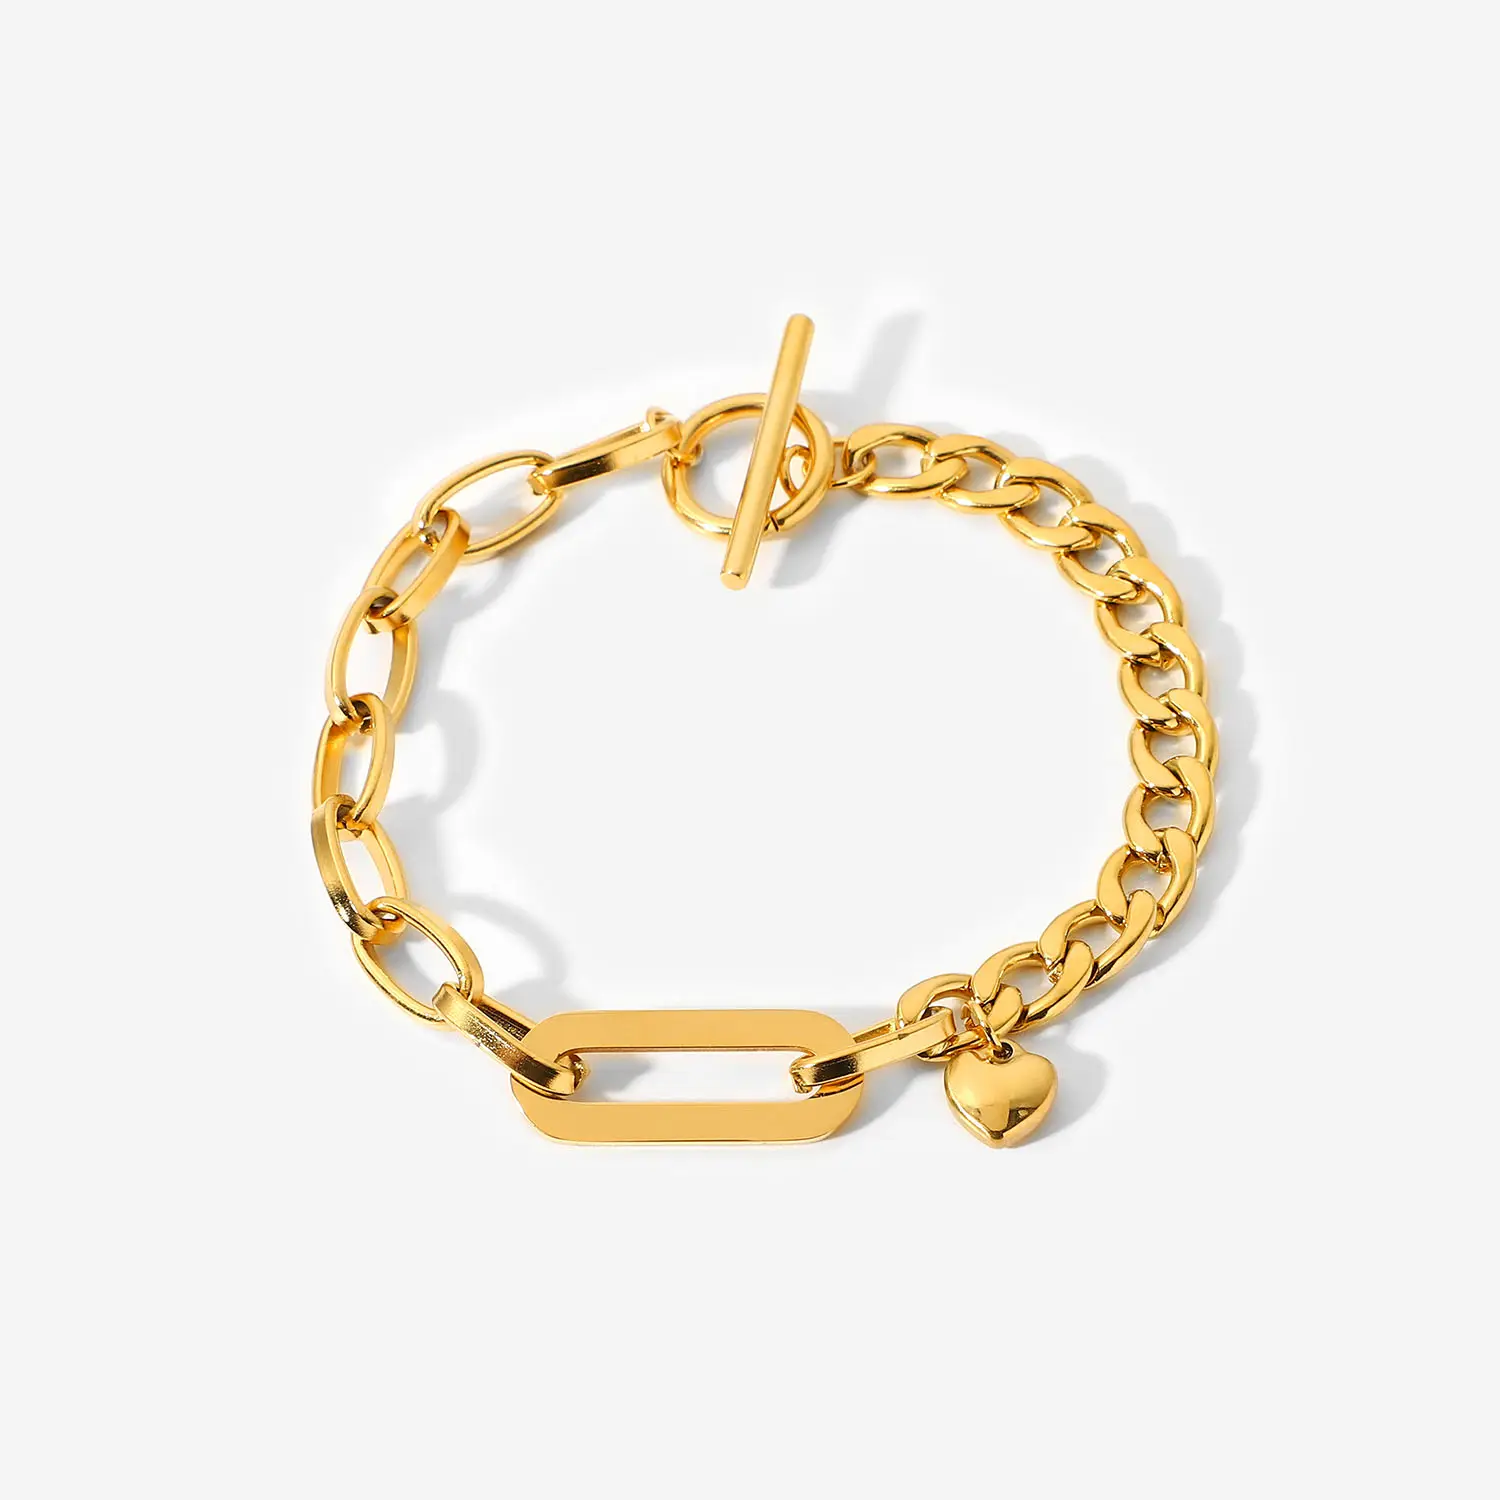 Wristband Geometric Oval Link Chain Bangles Jewelry Waterproof Gift 18k Stainless Steel Minimalism Women Golden Bracelets